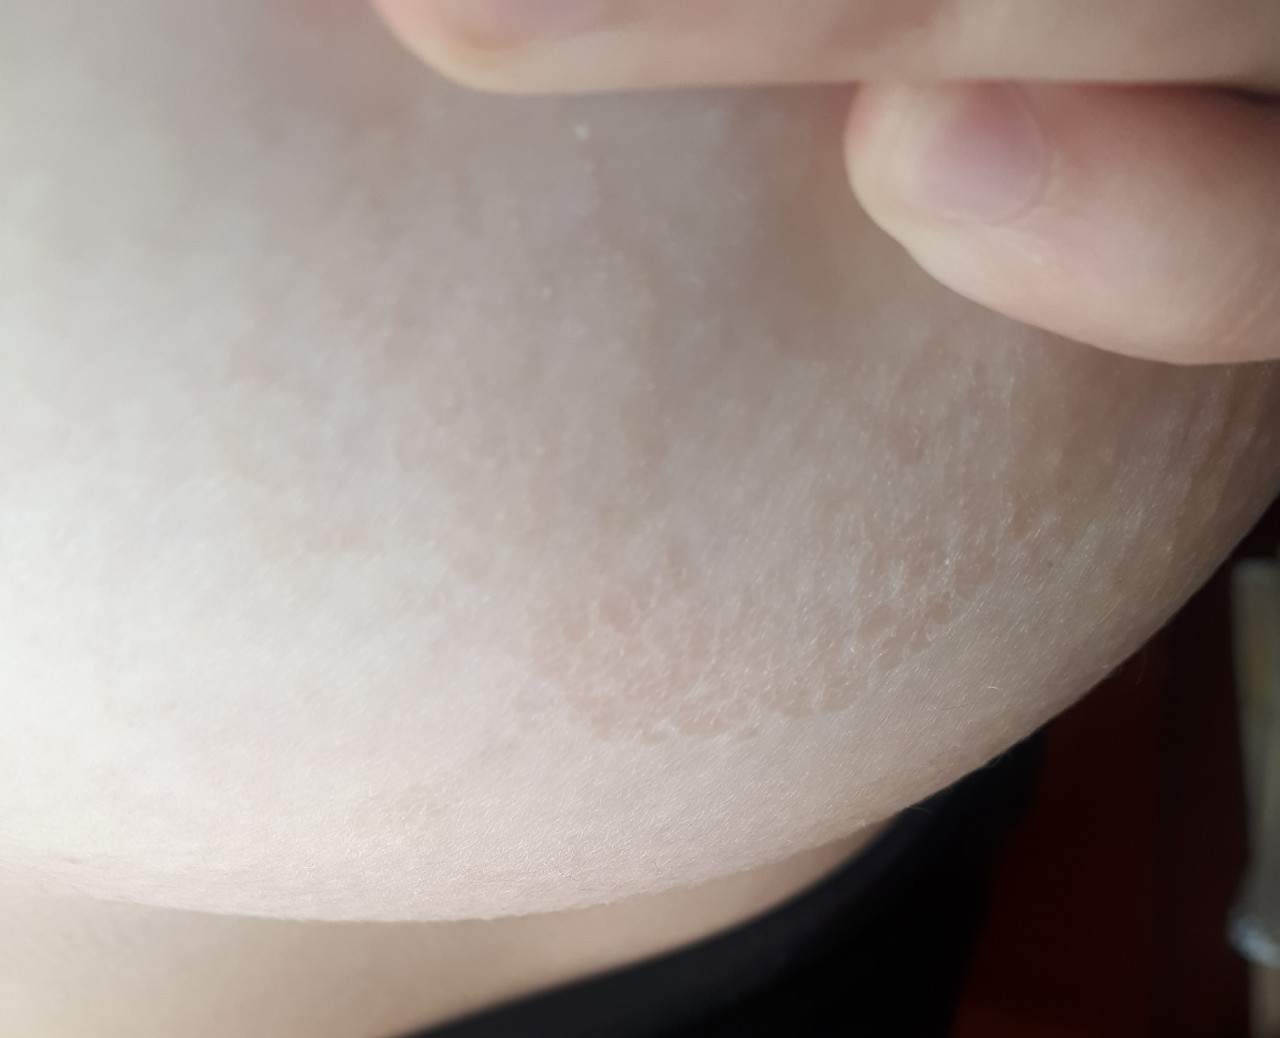 белые пятна на груди у женщин фото 15